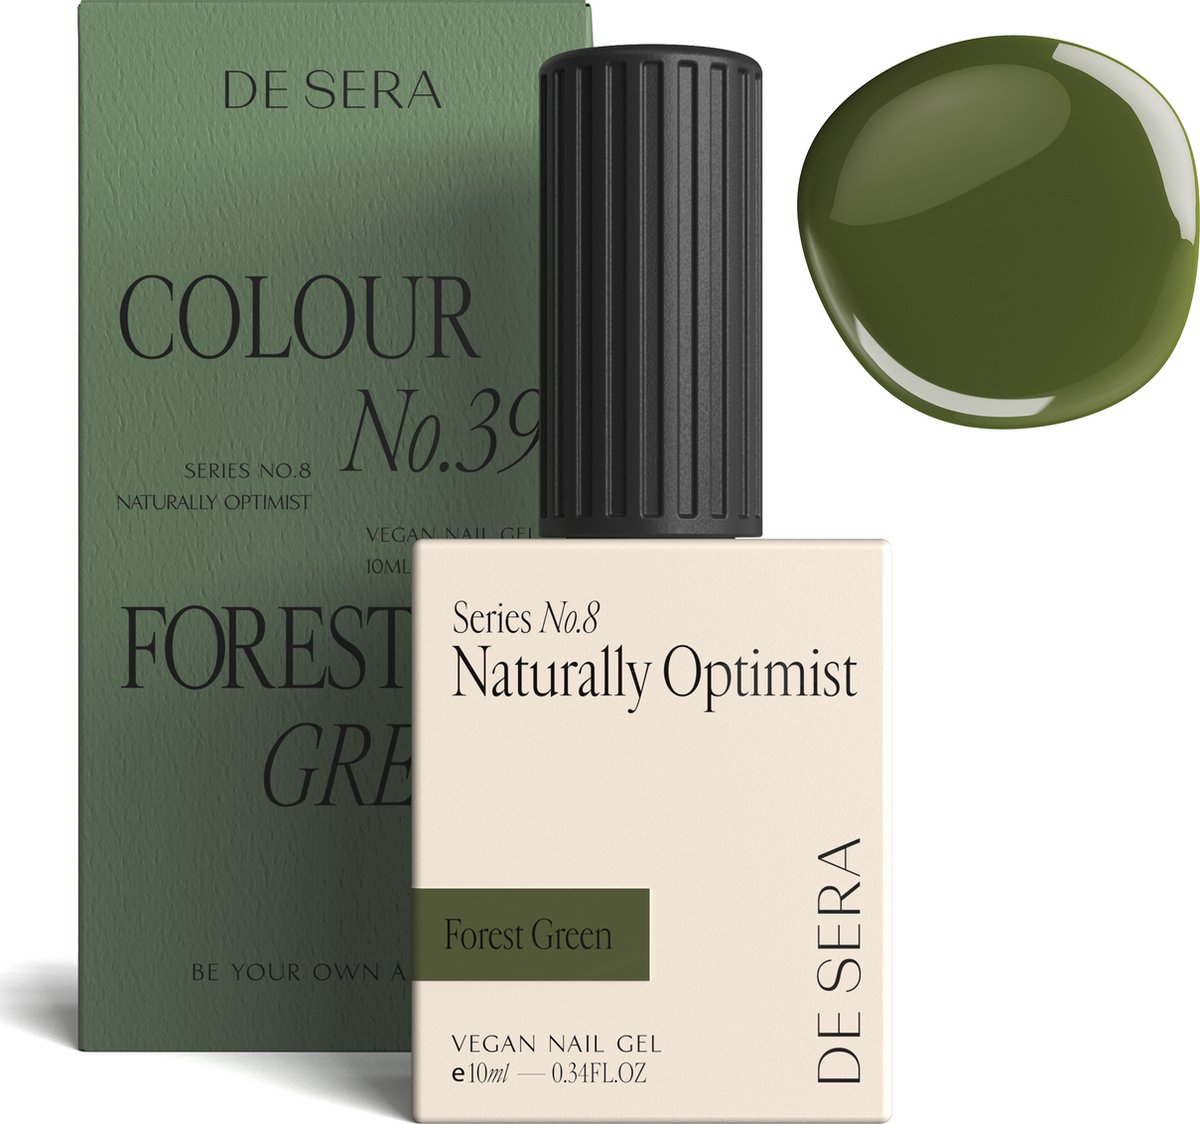 De Sera Gellak - Groene Gel Nagellak - Groen - 10ML - Colour No. 39 Forest Green